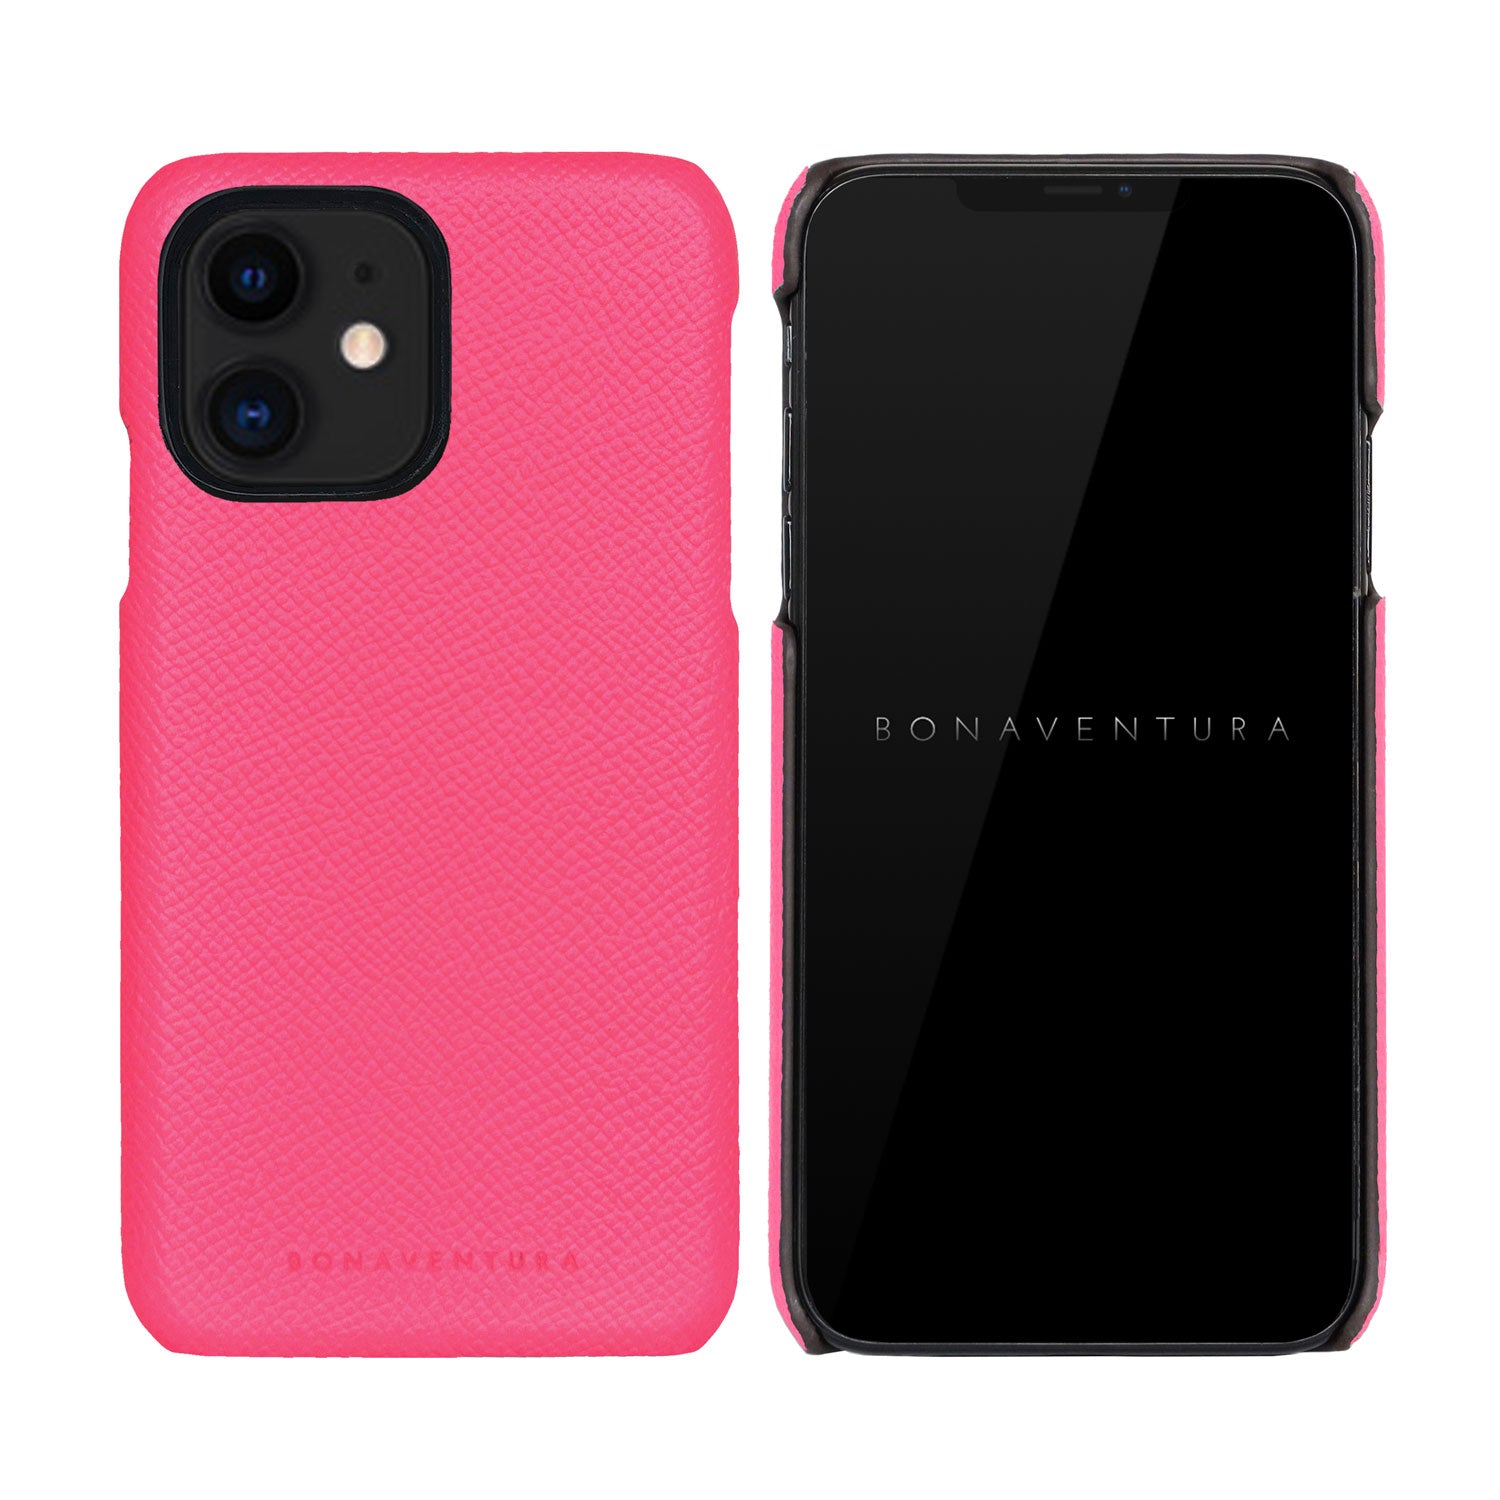 BONAVEUTURA ボナベンチュラ iPhone12mini 限定カラー-